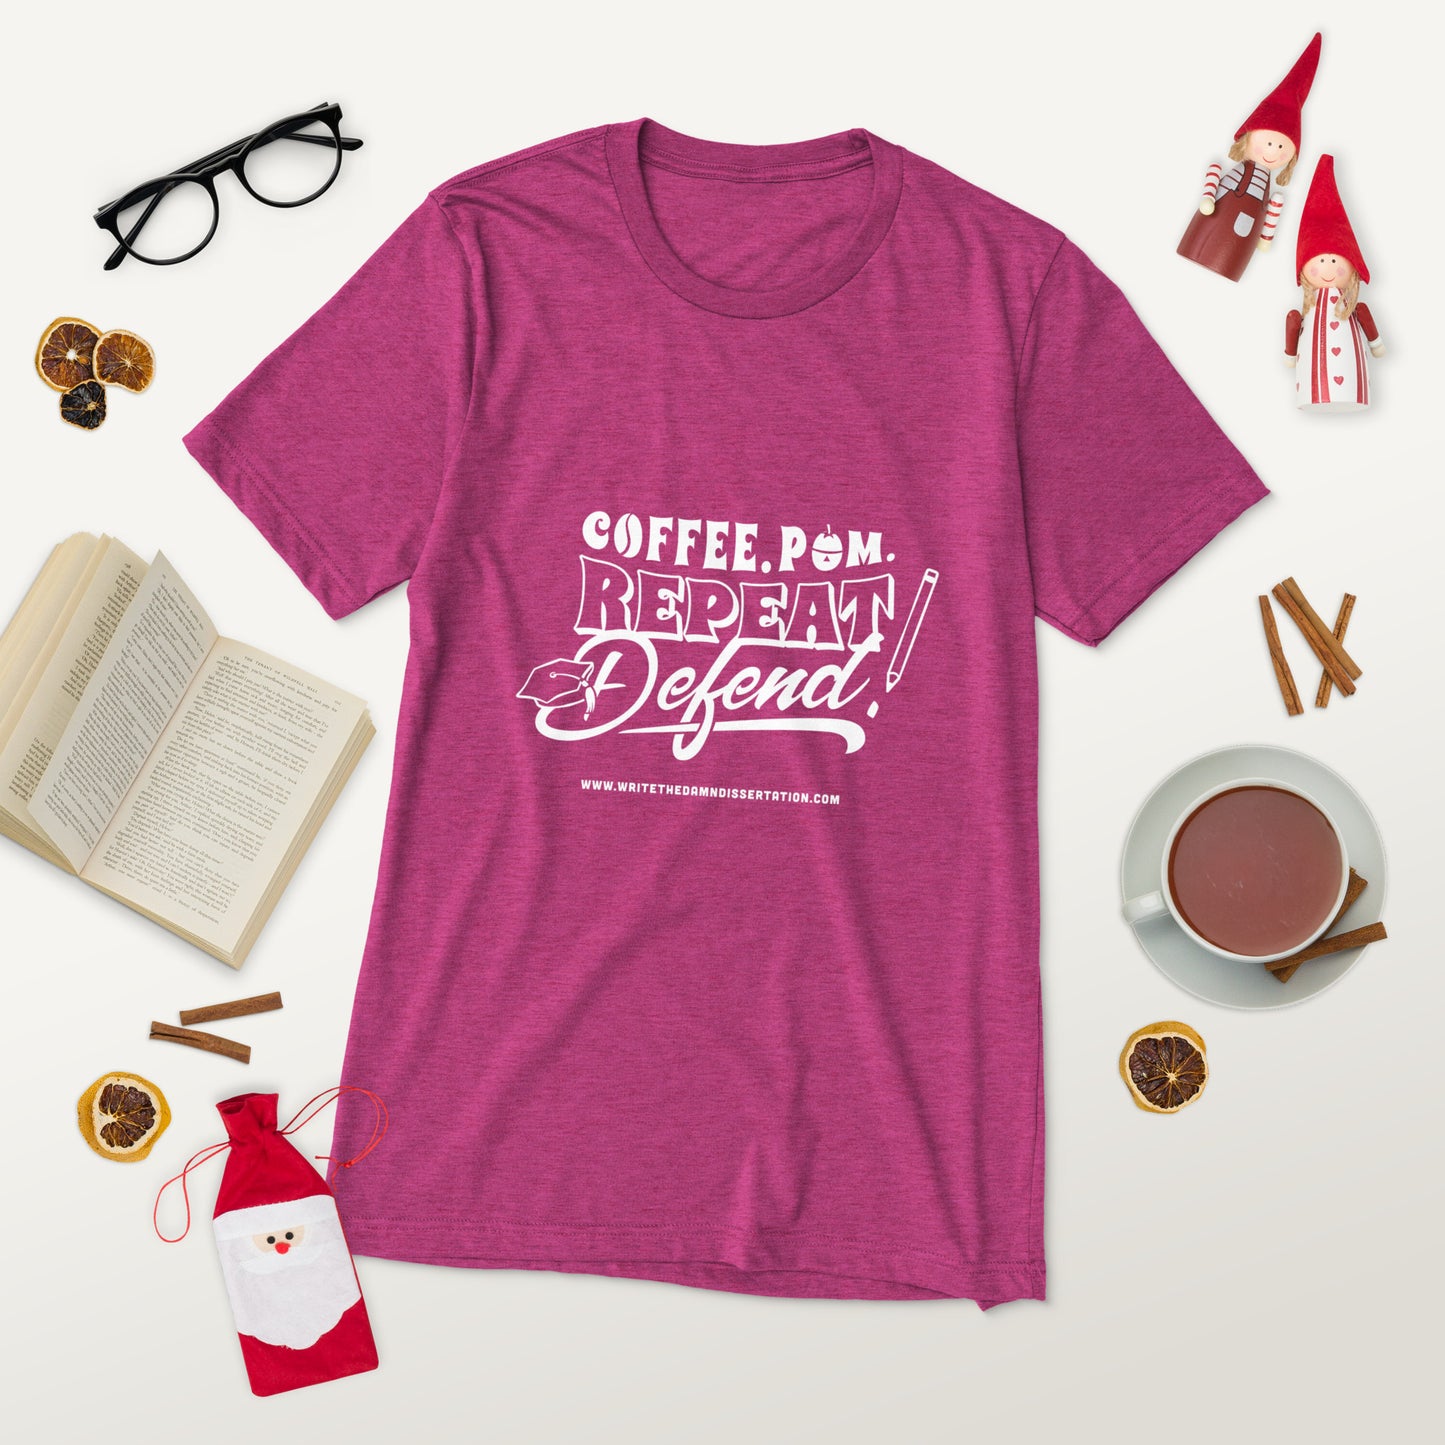 Coffee.Pom.Repeat.Defend! Short sleeve t-shirt